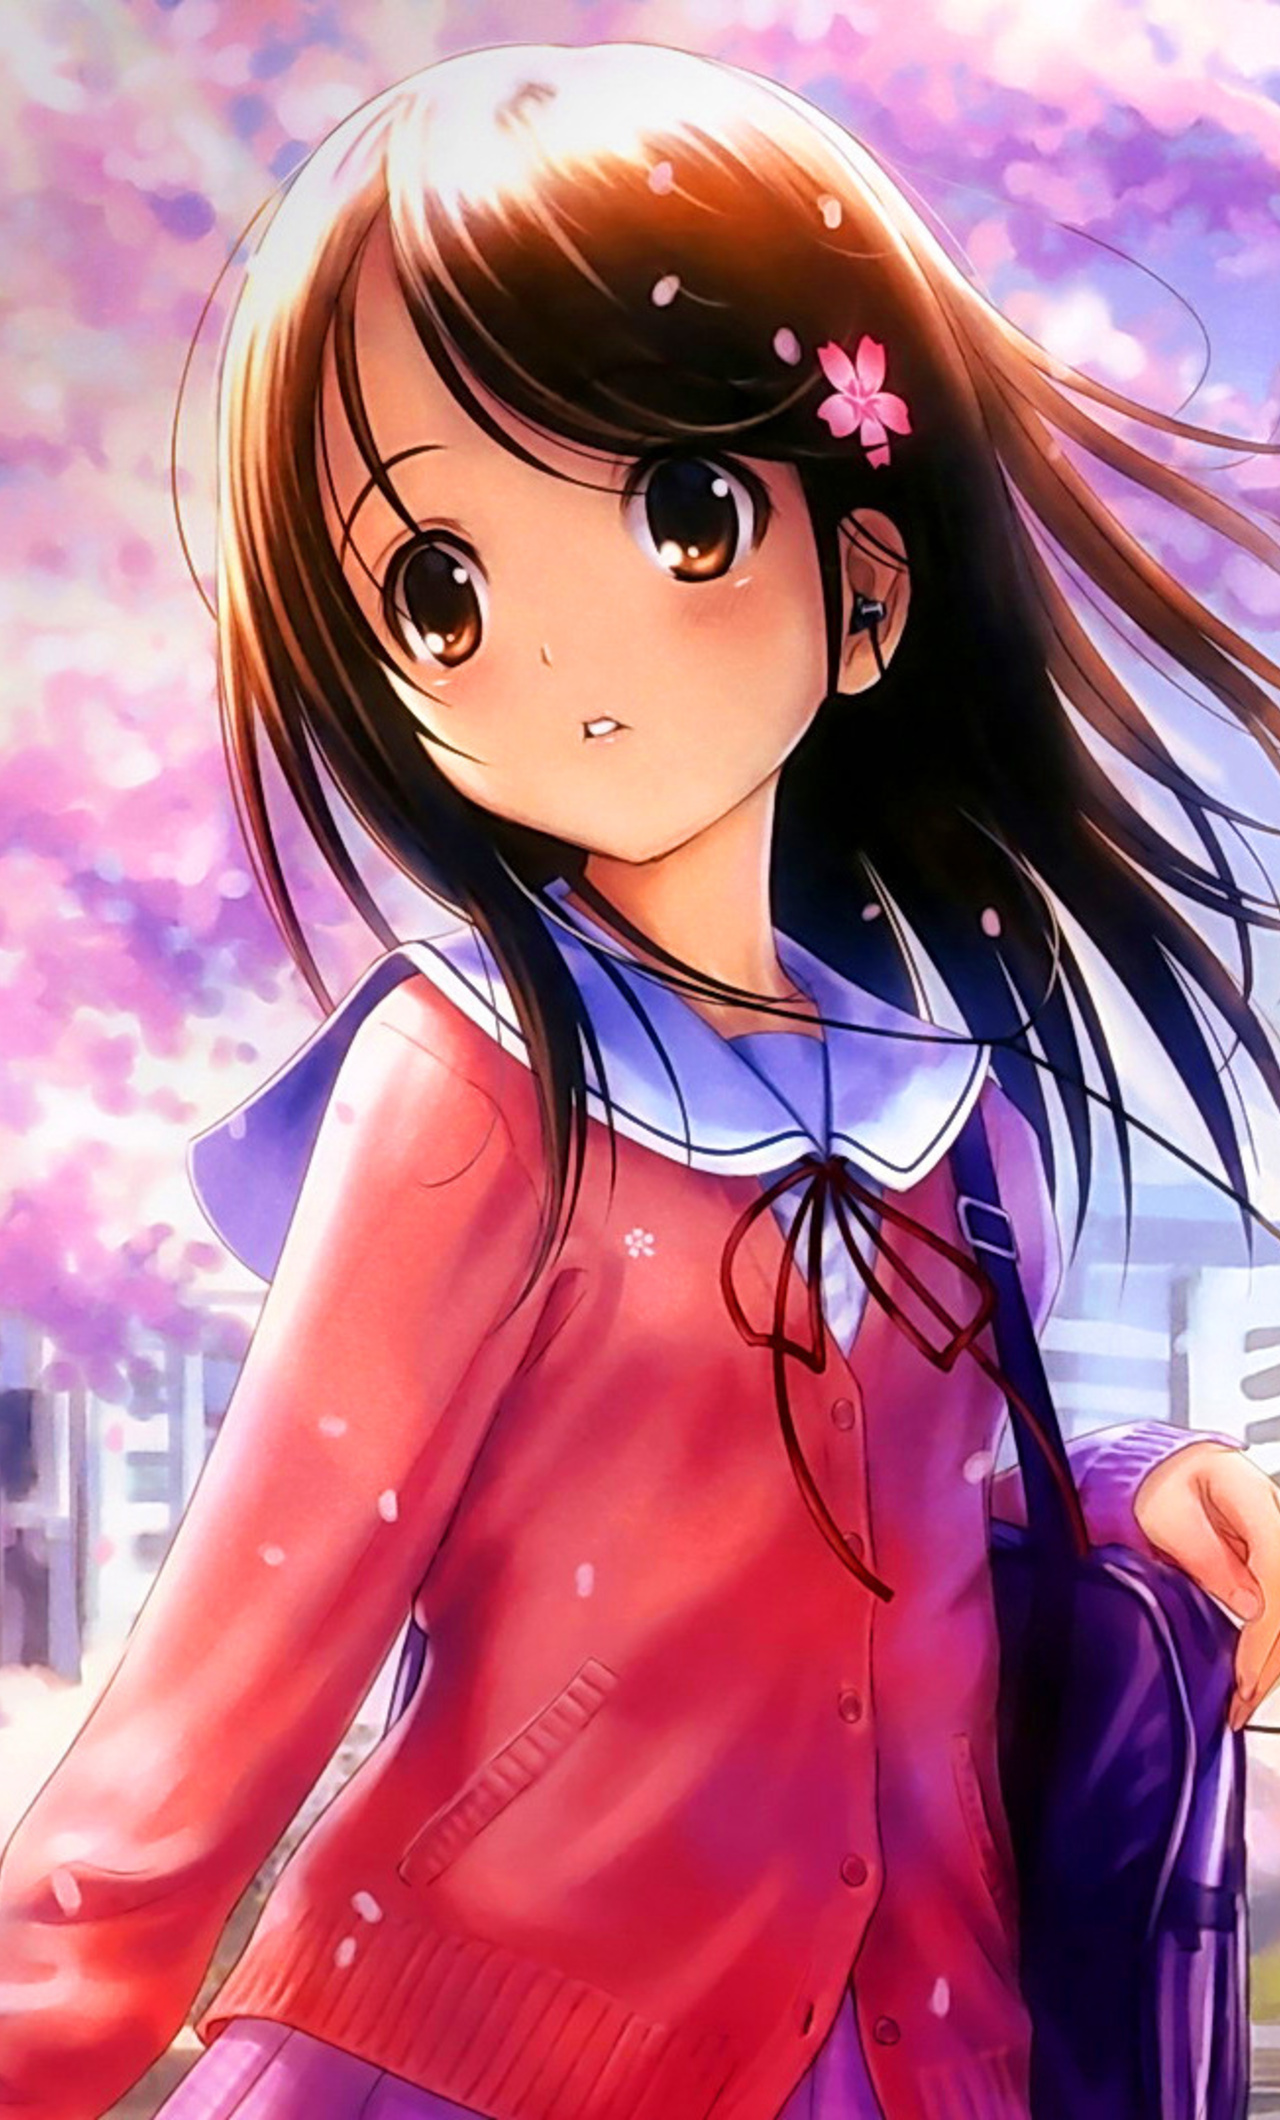 1280x2120 Anime Girl With Headphones Iphone 6 Hd 4k Wallpapers